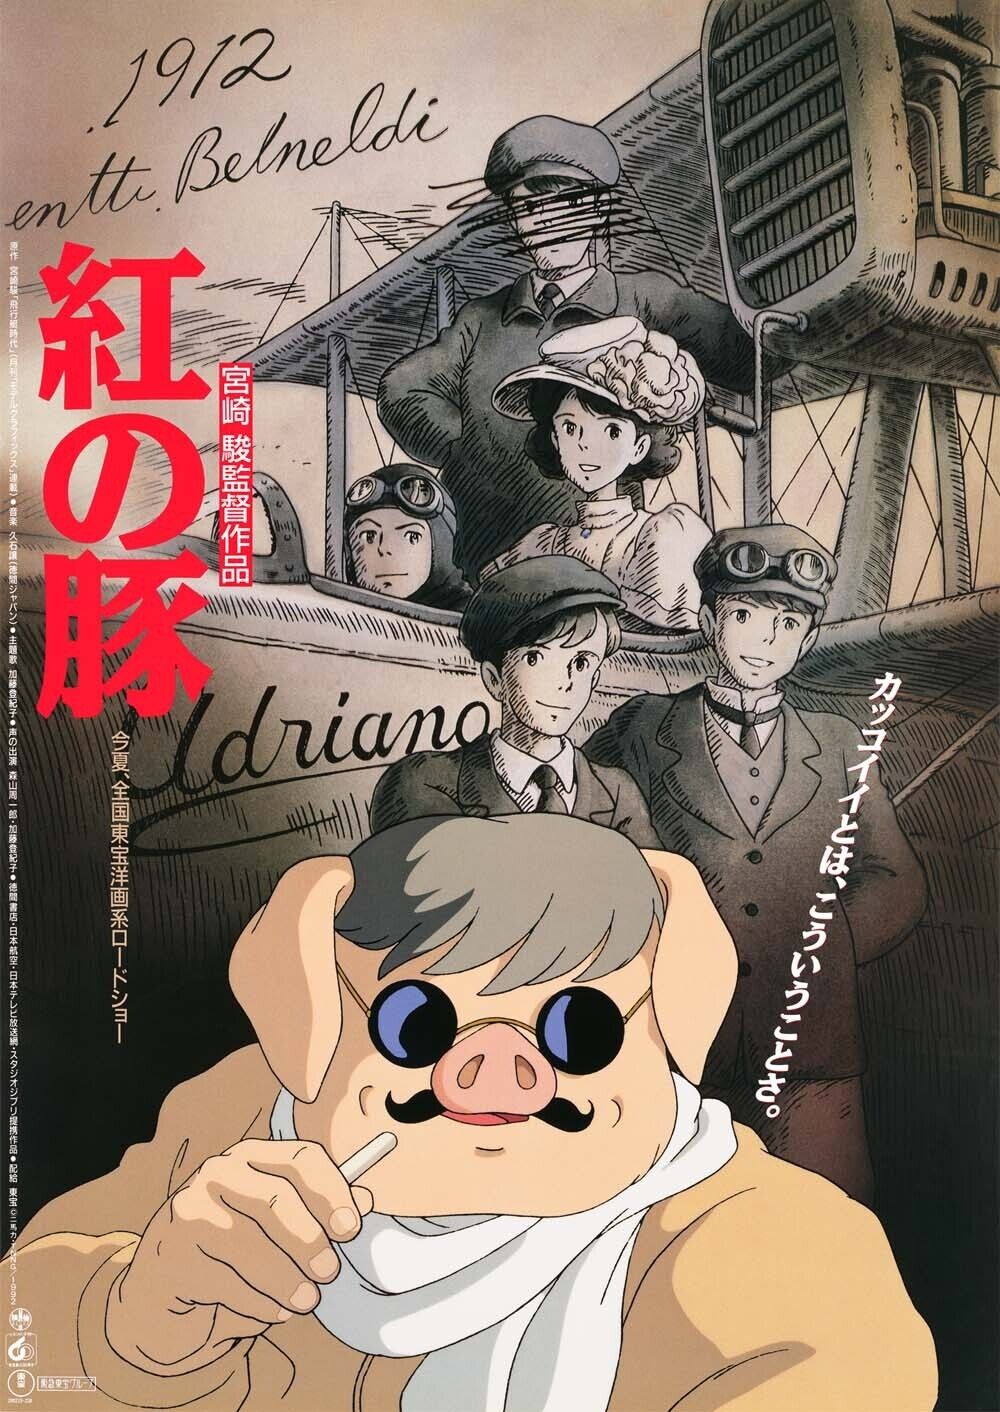 Porco Rosso Studio Ghibli Movie Reprint Postar First edition B2(20x28)